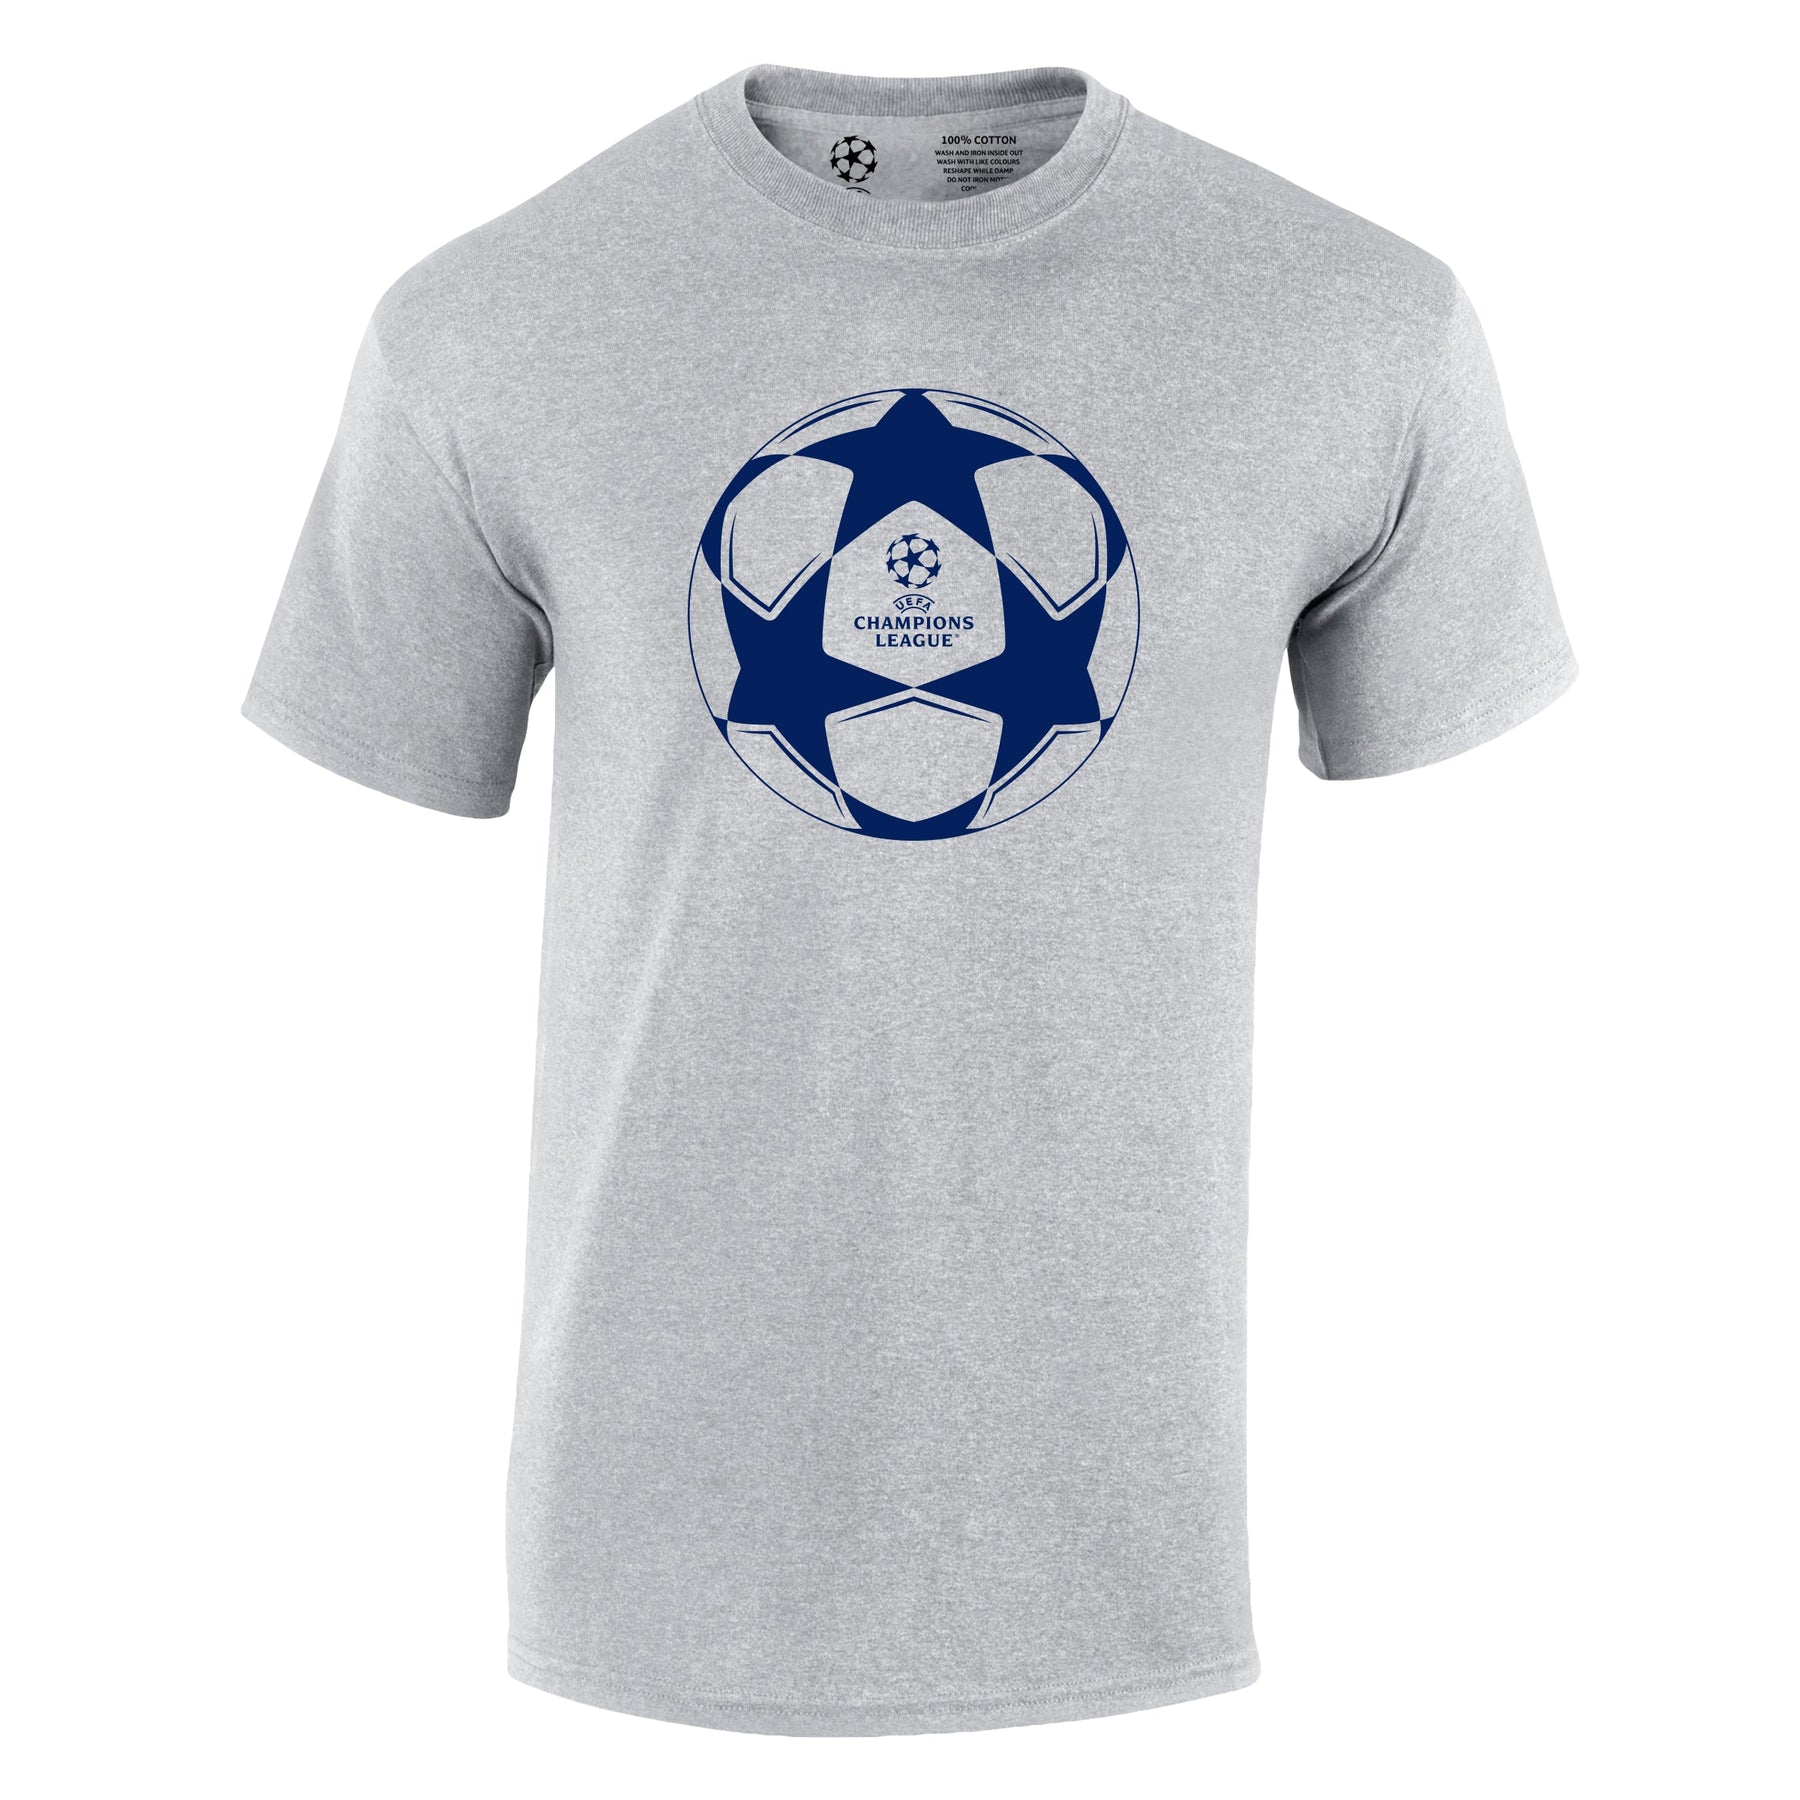 Champions League Football T-Shirt Grey